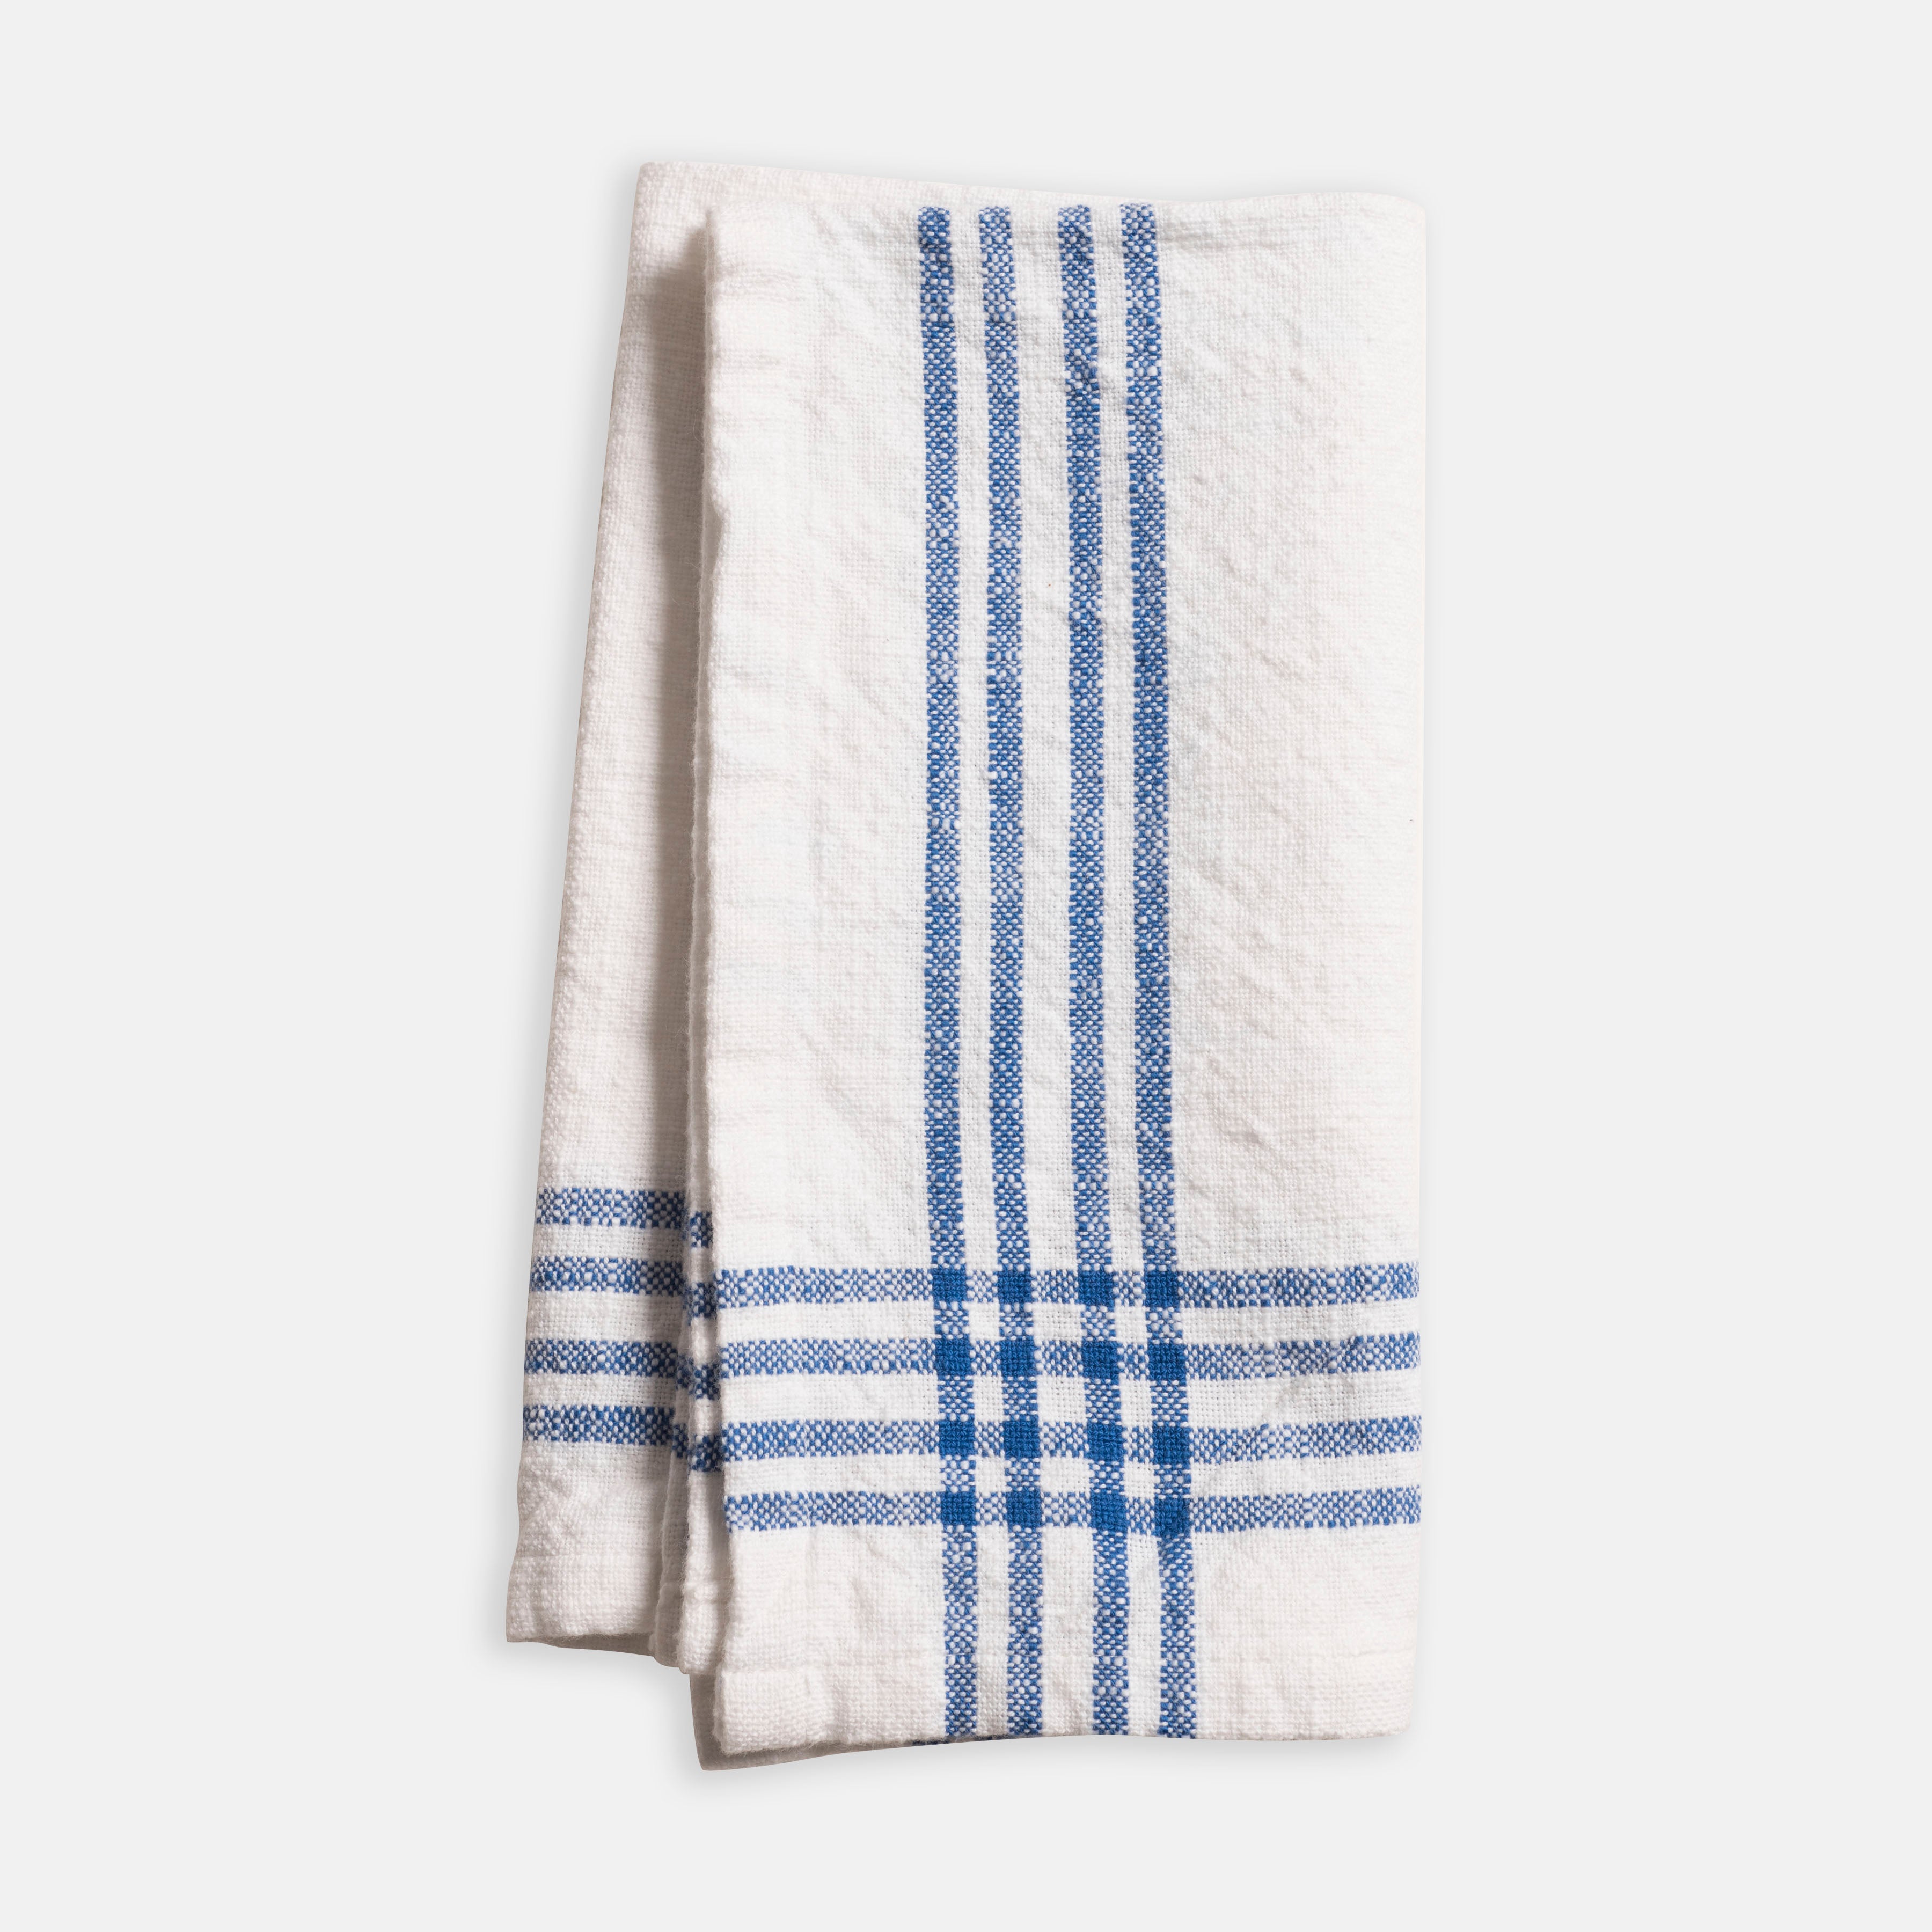 Linen bath sheet, Stonewashed linen bath towels, Thick striped